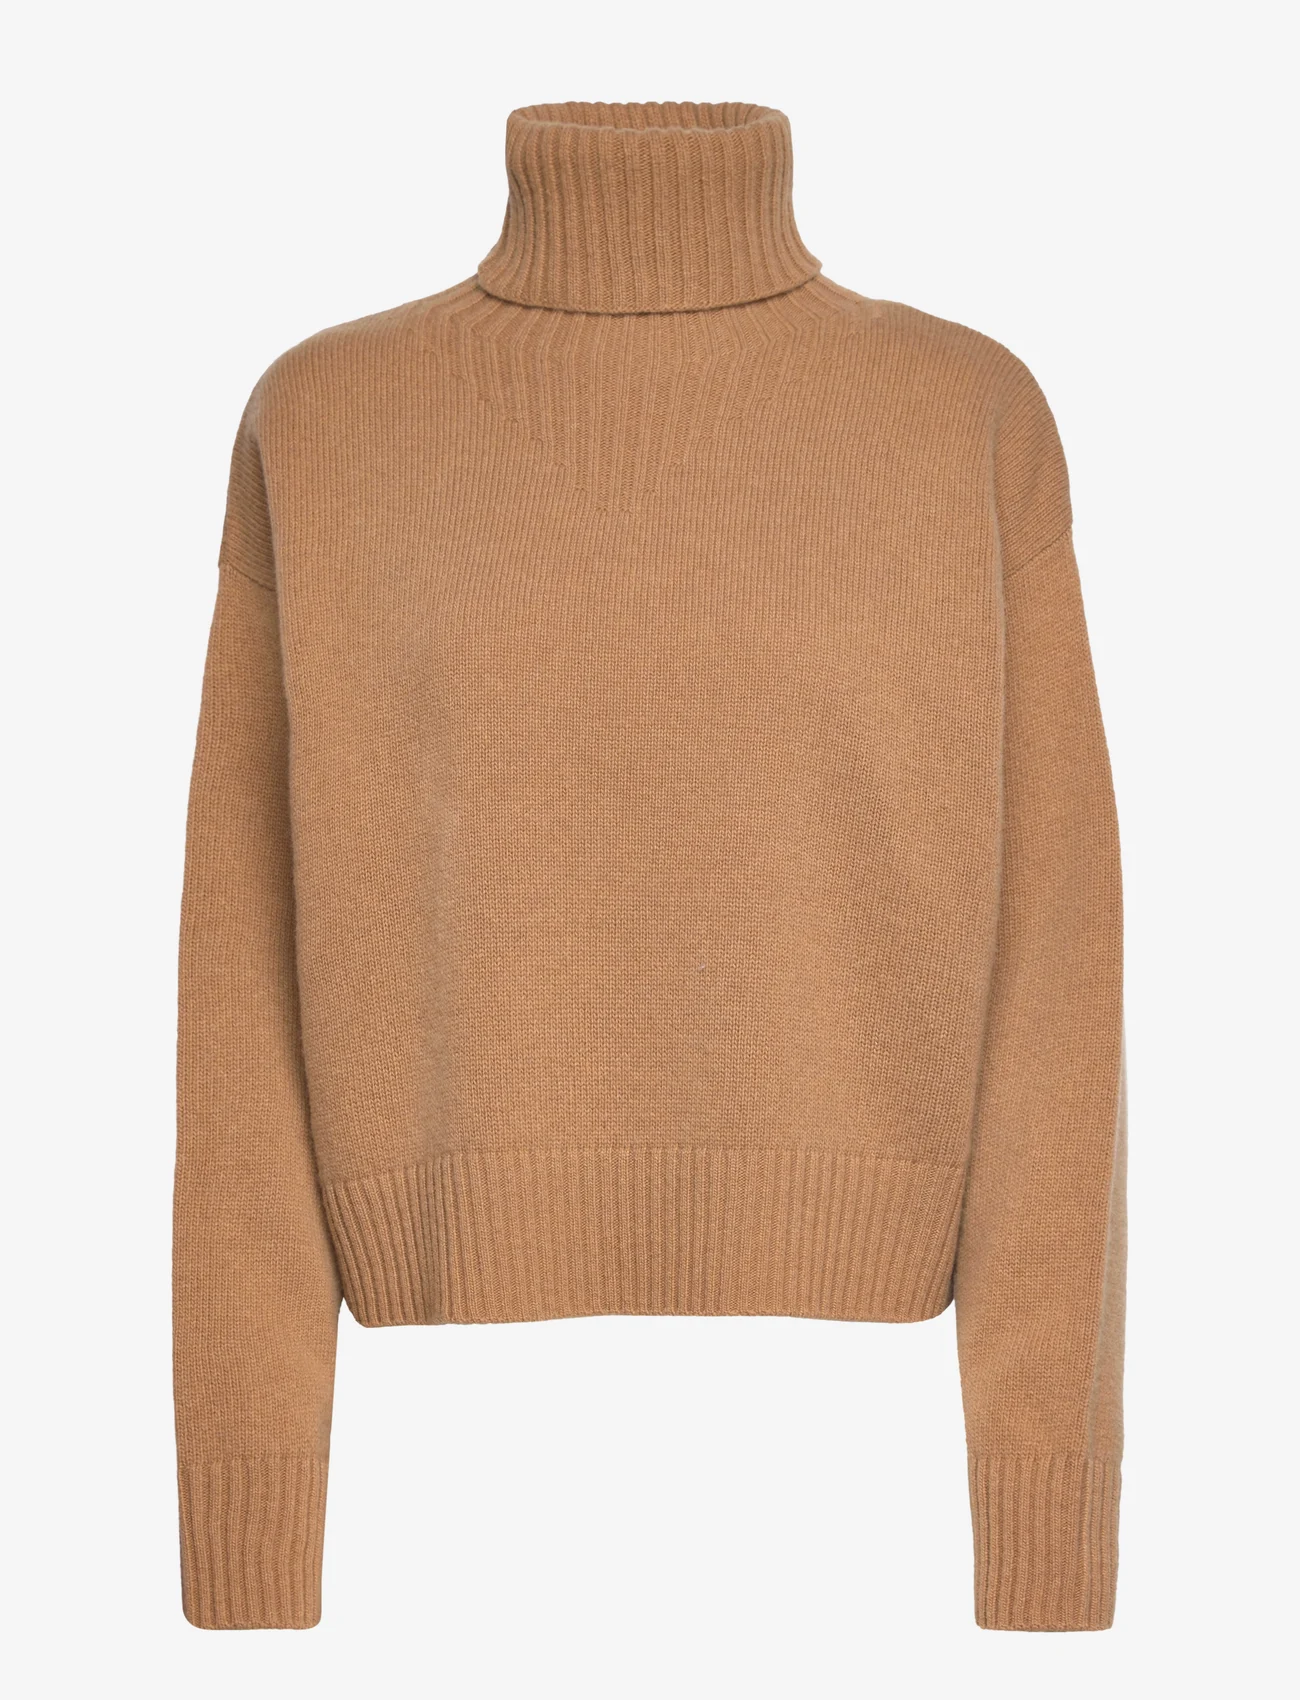 Filippa K - Wool Turtleneck Sweater - polotröjor - camel - 0